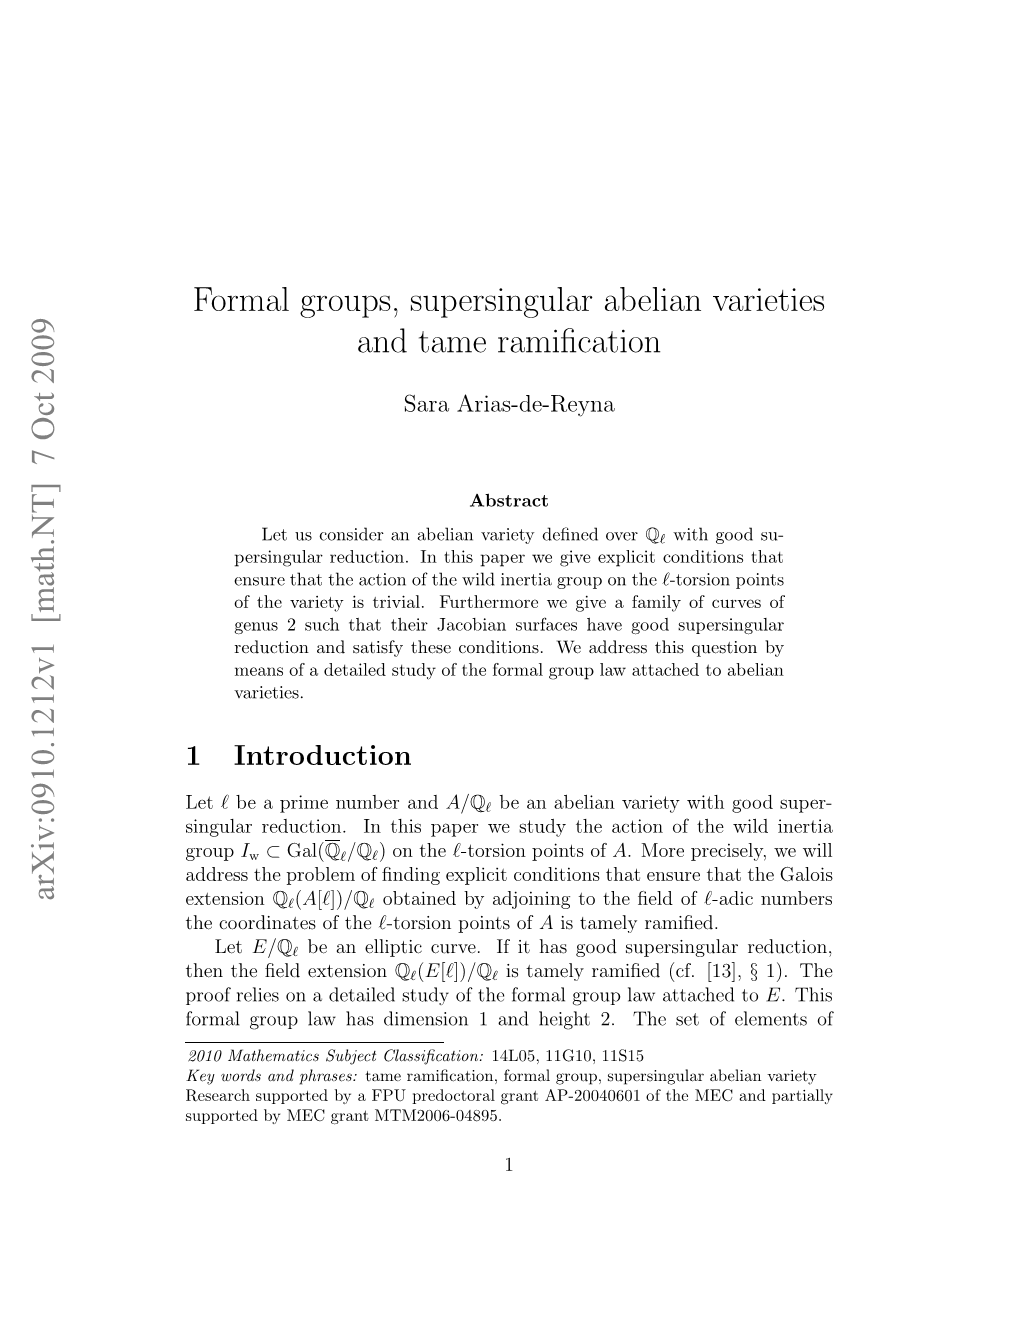 Formal Groups, Supersingular Abelian Varieties and Tame Ramification